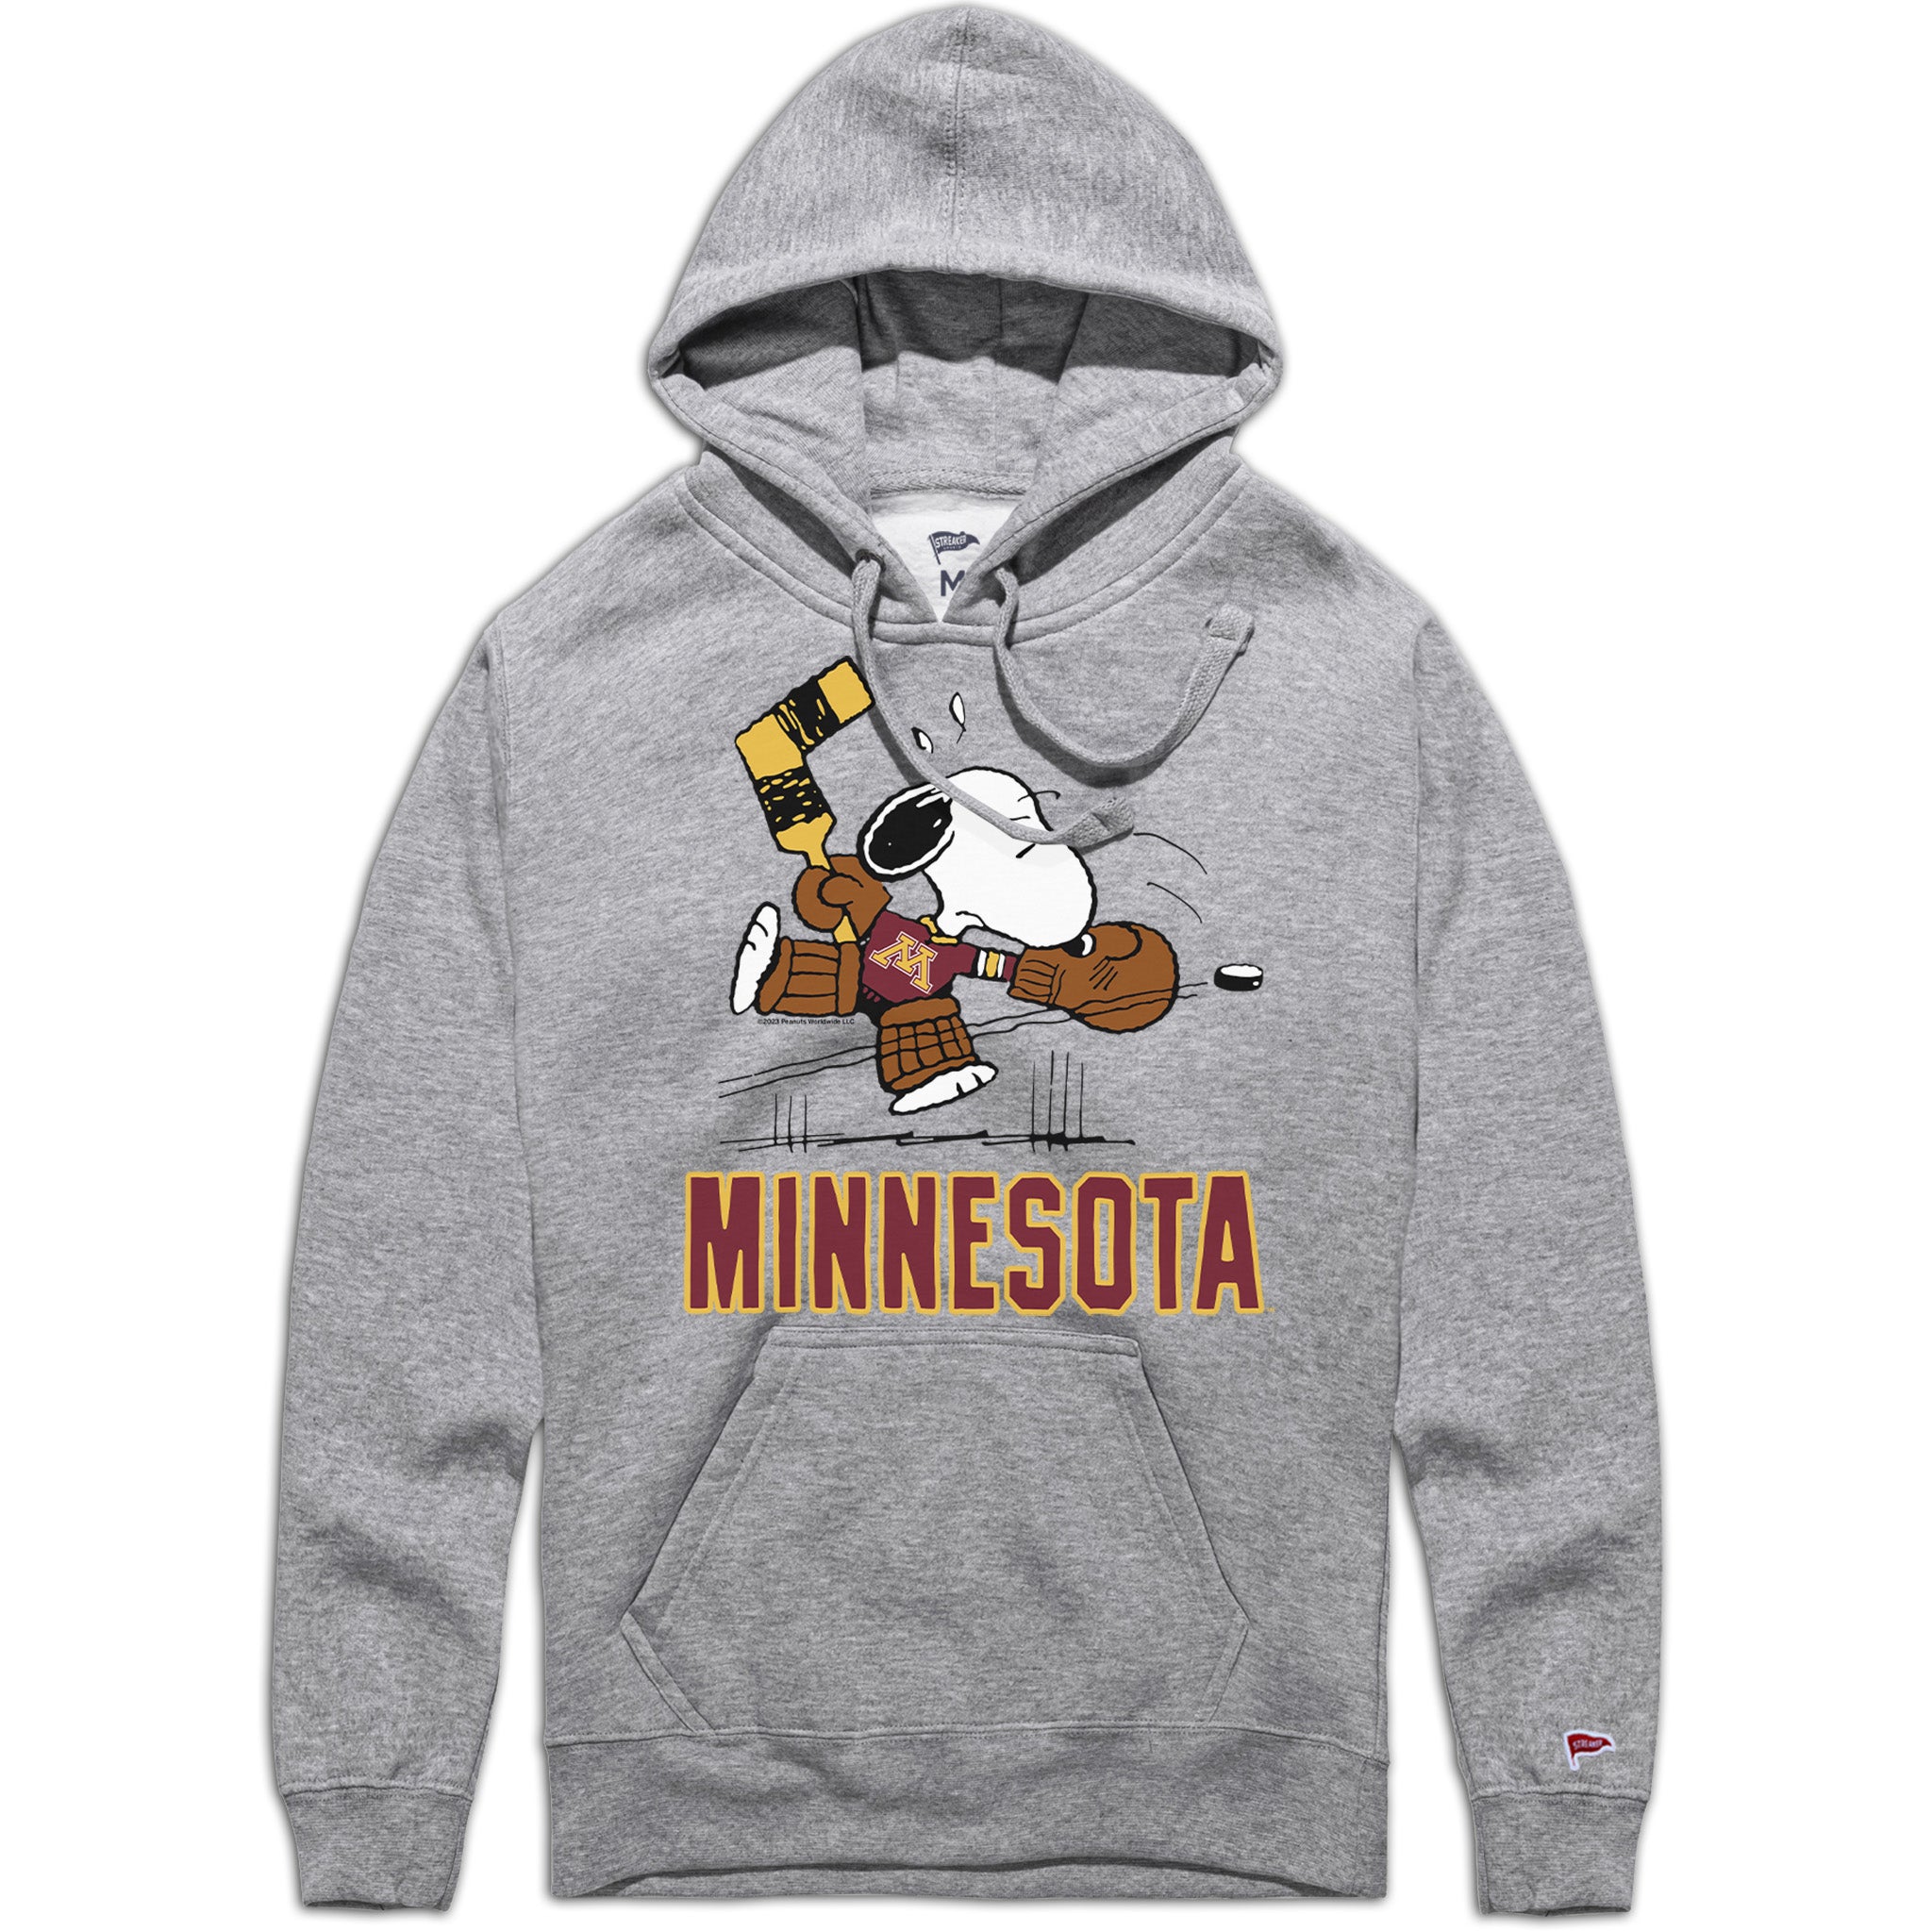 Peanuts x Minnesota Snoopy Goalie Hoodie – Streaker Sports